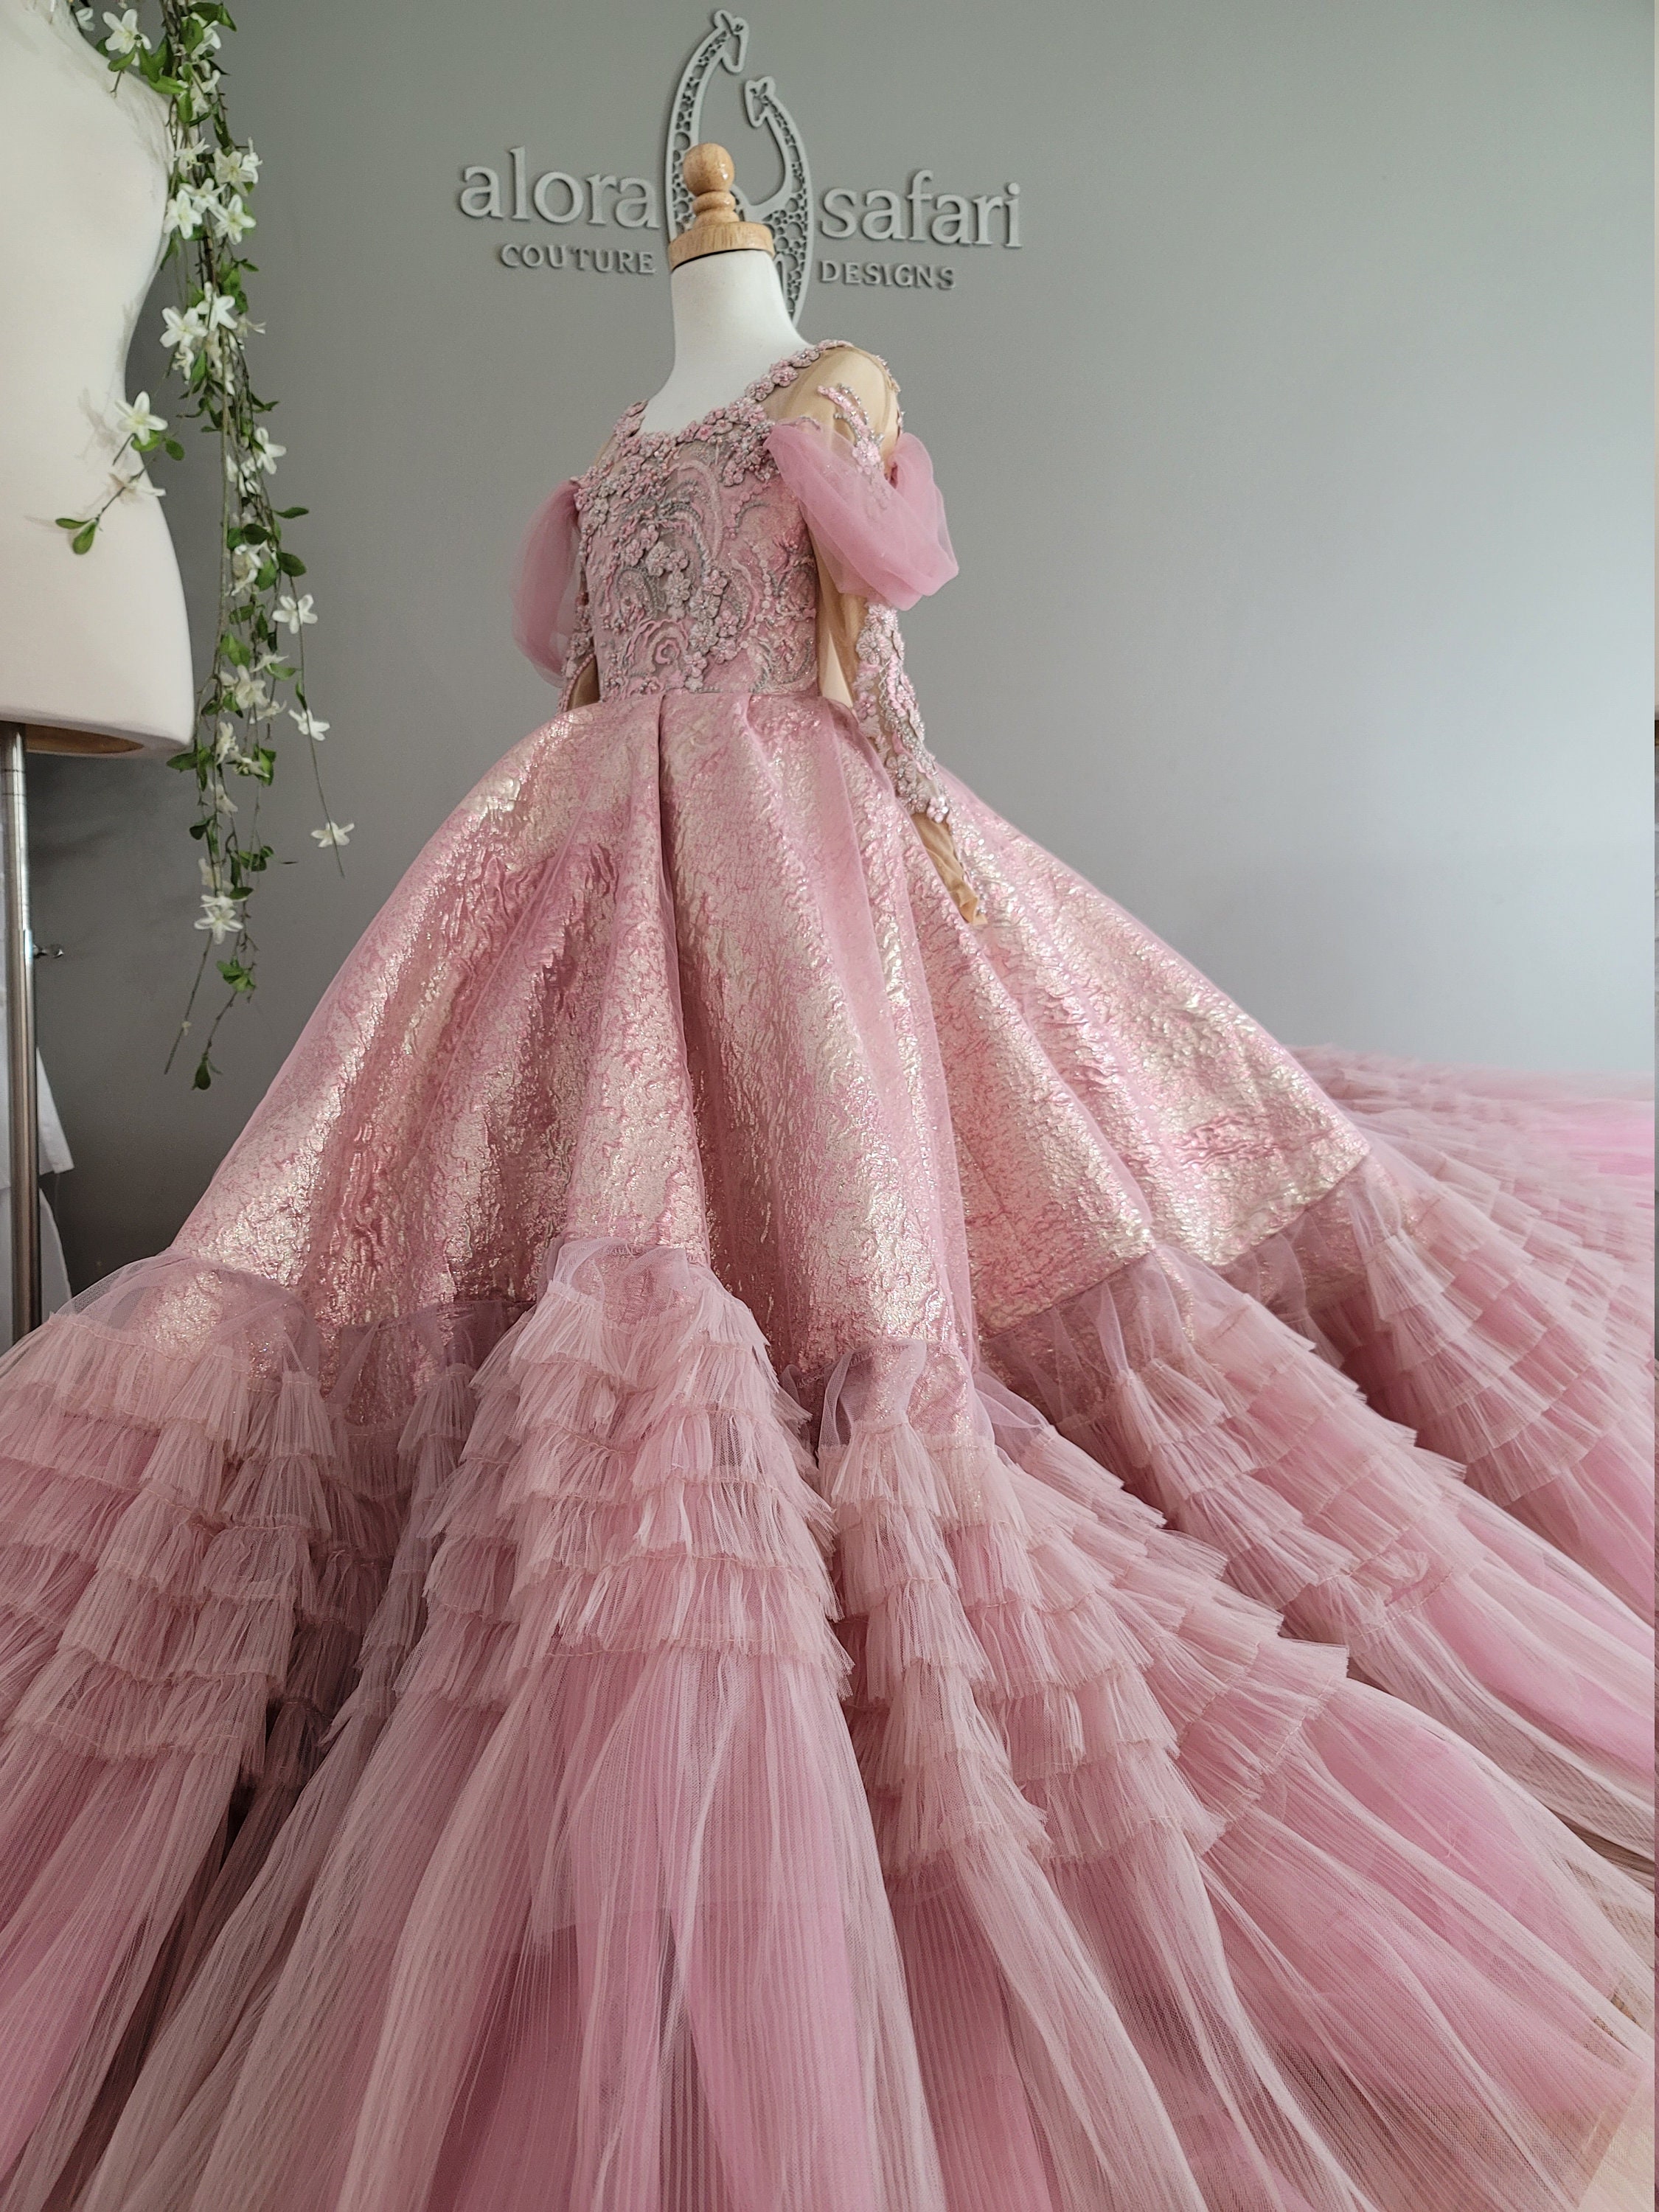 Engagement Gown | Princess Gowns | Engagement Dress - Wish N Wed |  Engagement dress for bride, Engagement dresses, Reception outfit